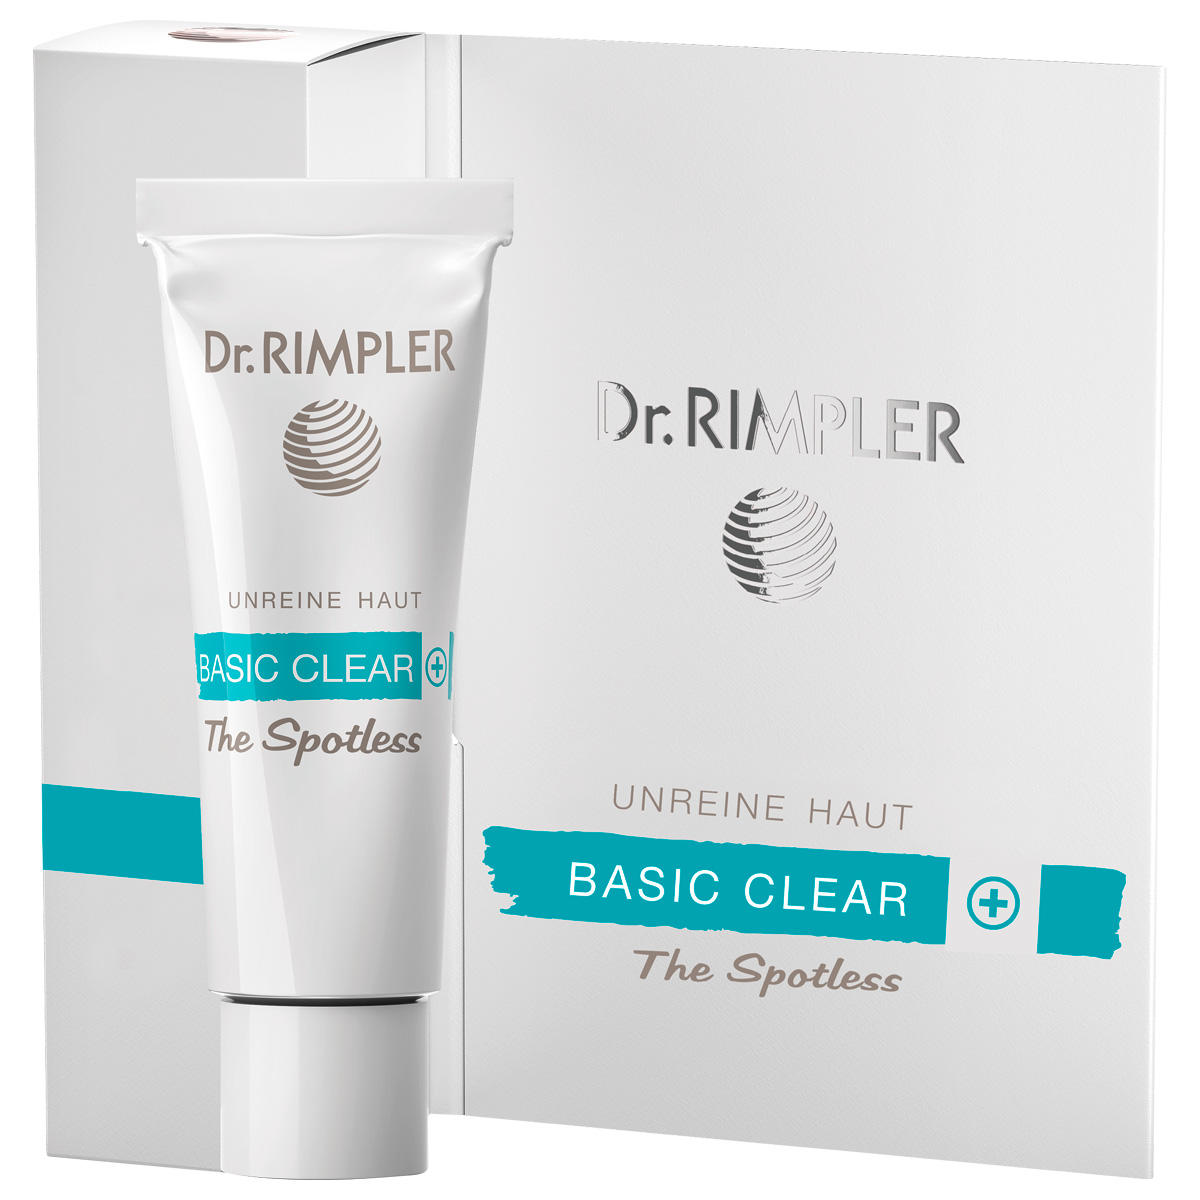 Dr. RIMPLER BASIC CLEAR+ The Spotless 10 ml - 2